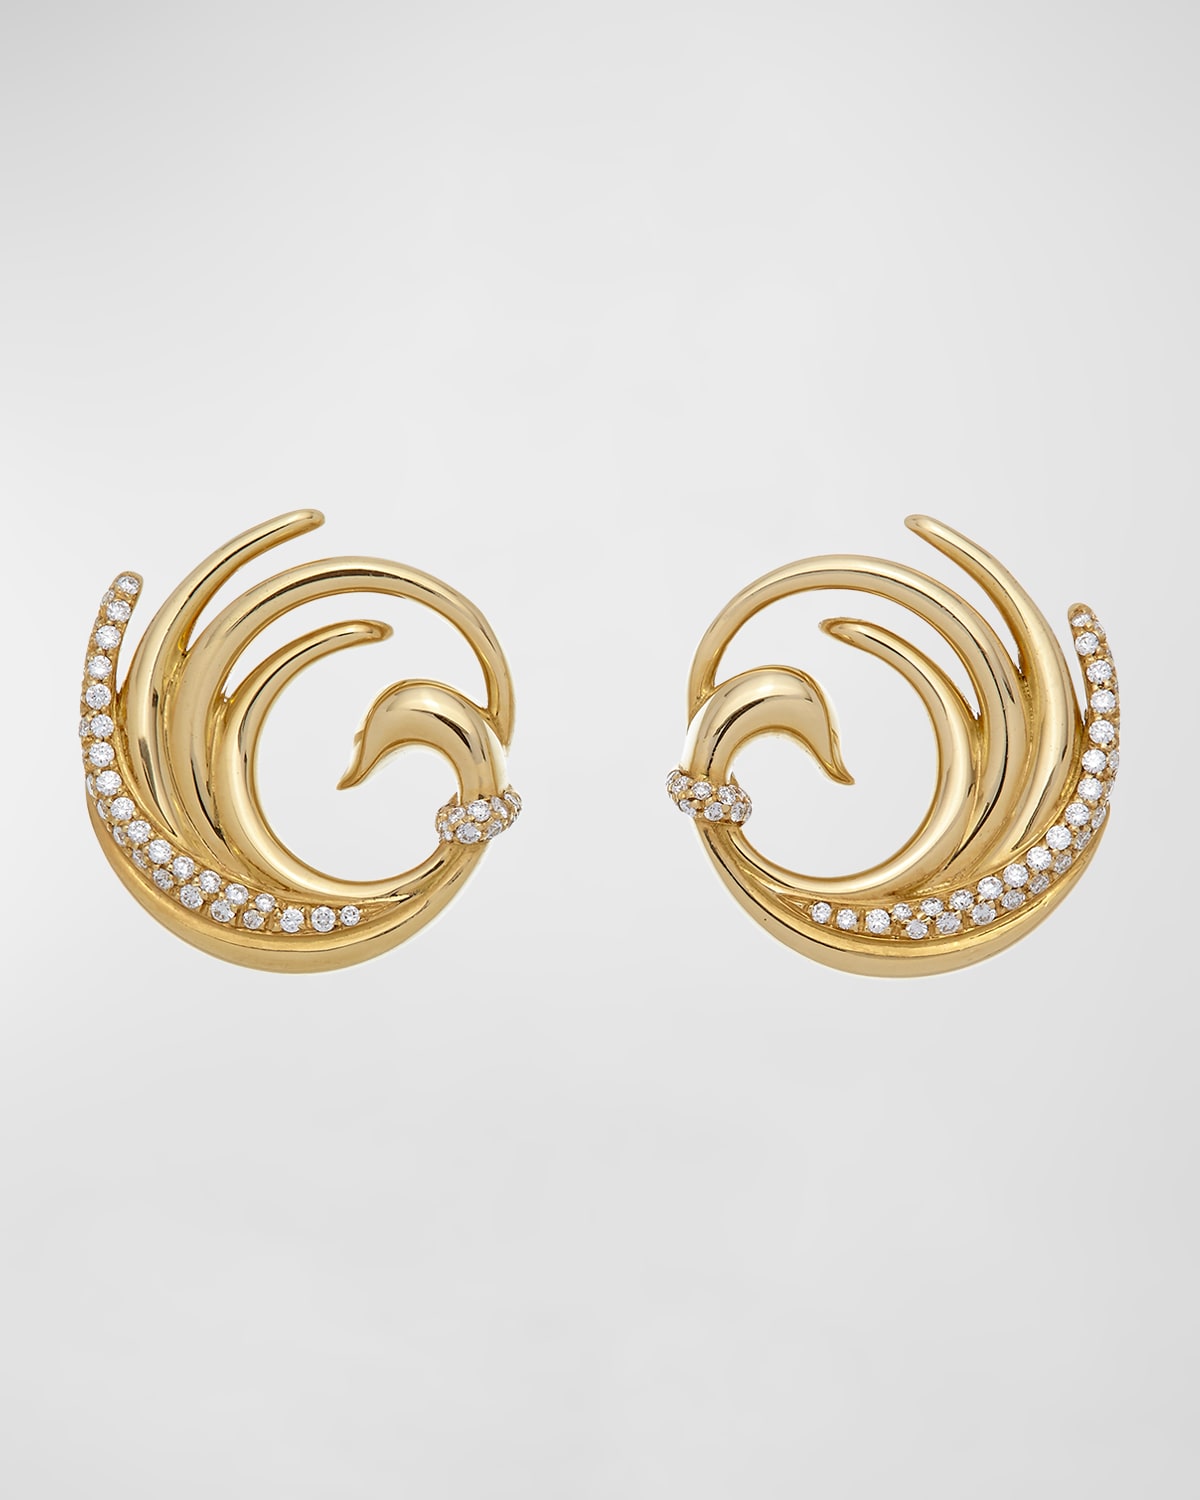 Krisonia 18k Yellow Gold Swan Earrings With Diamonds